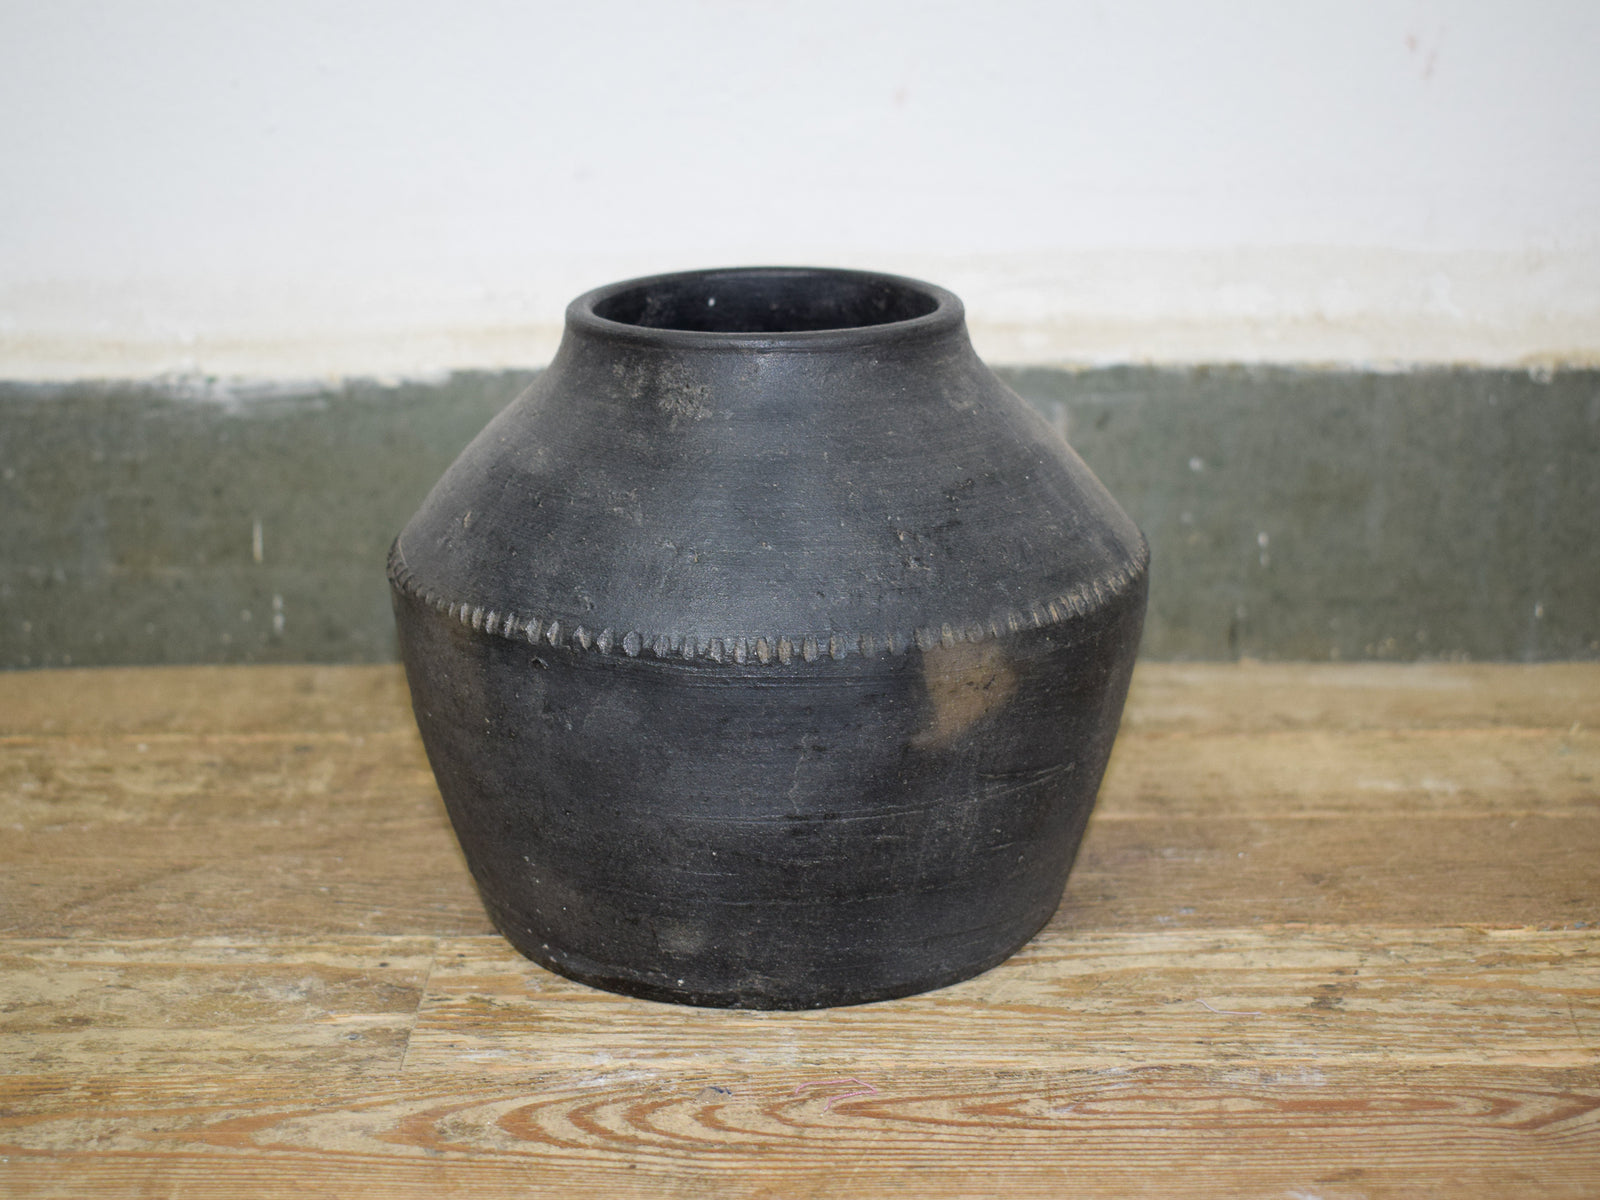 MIL-2302 Clay Pot C29